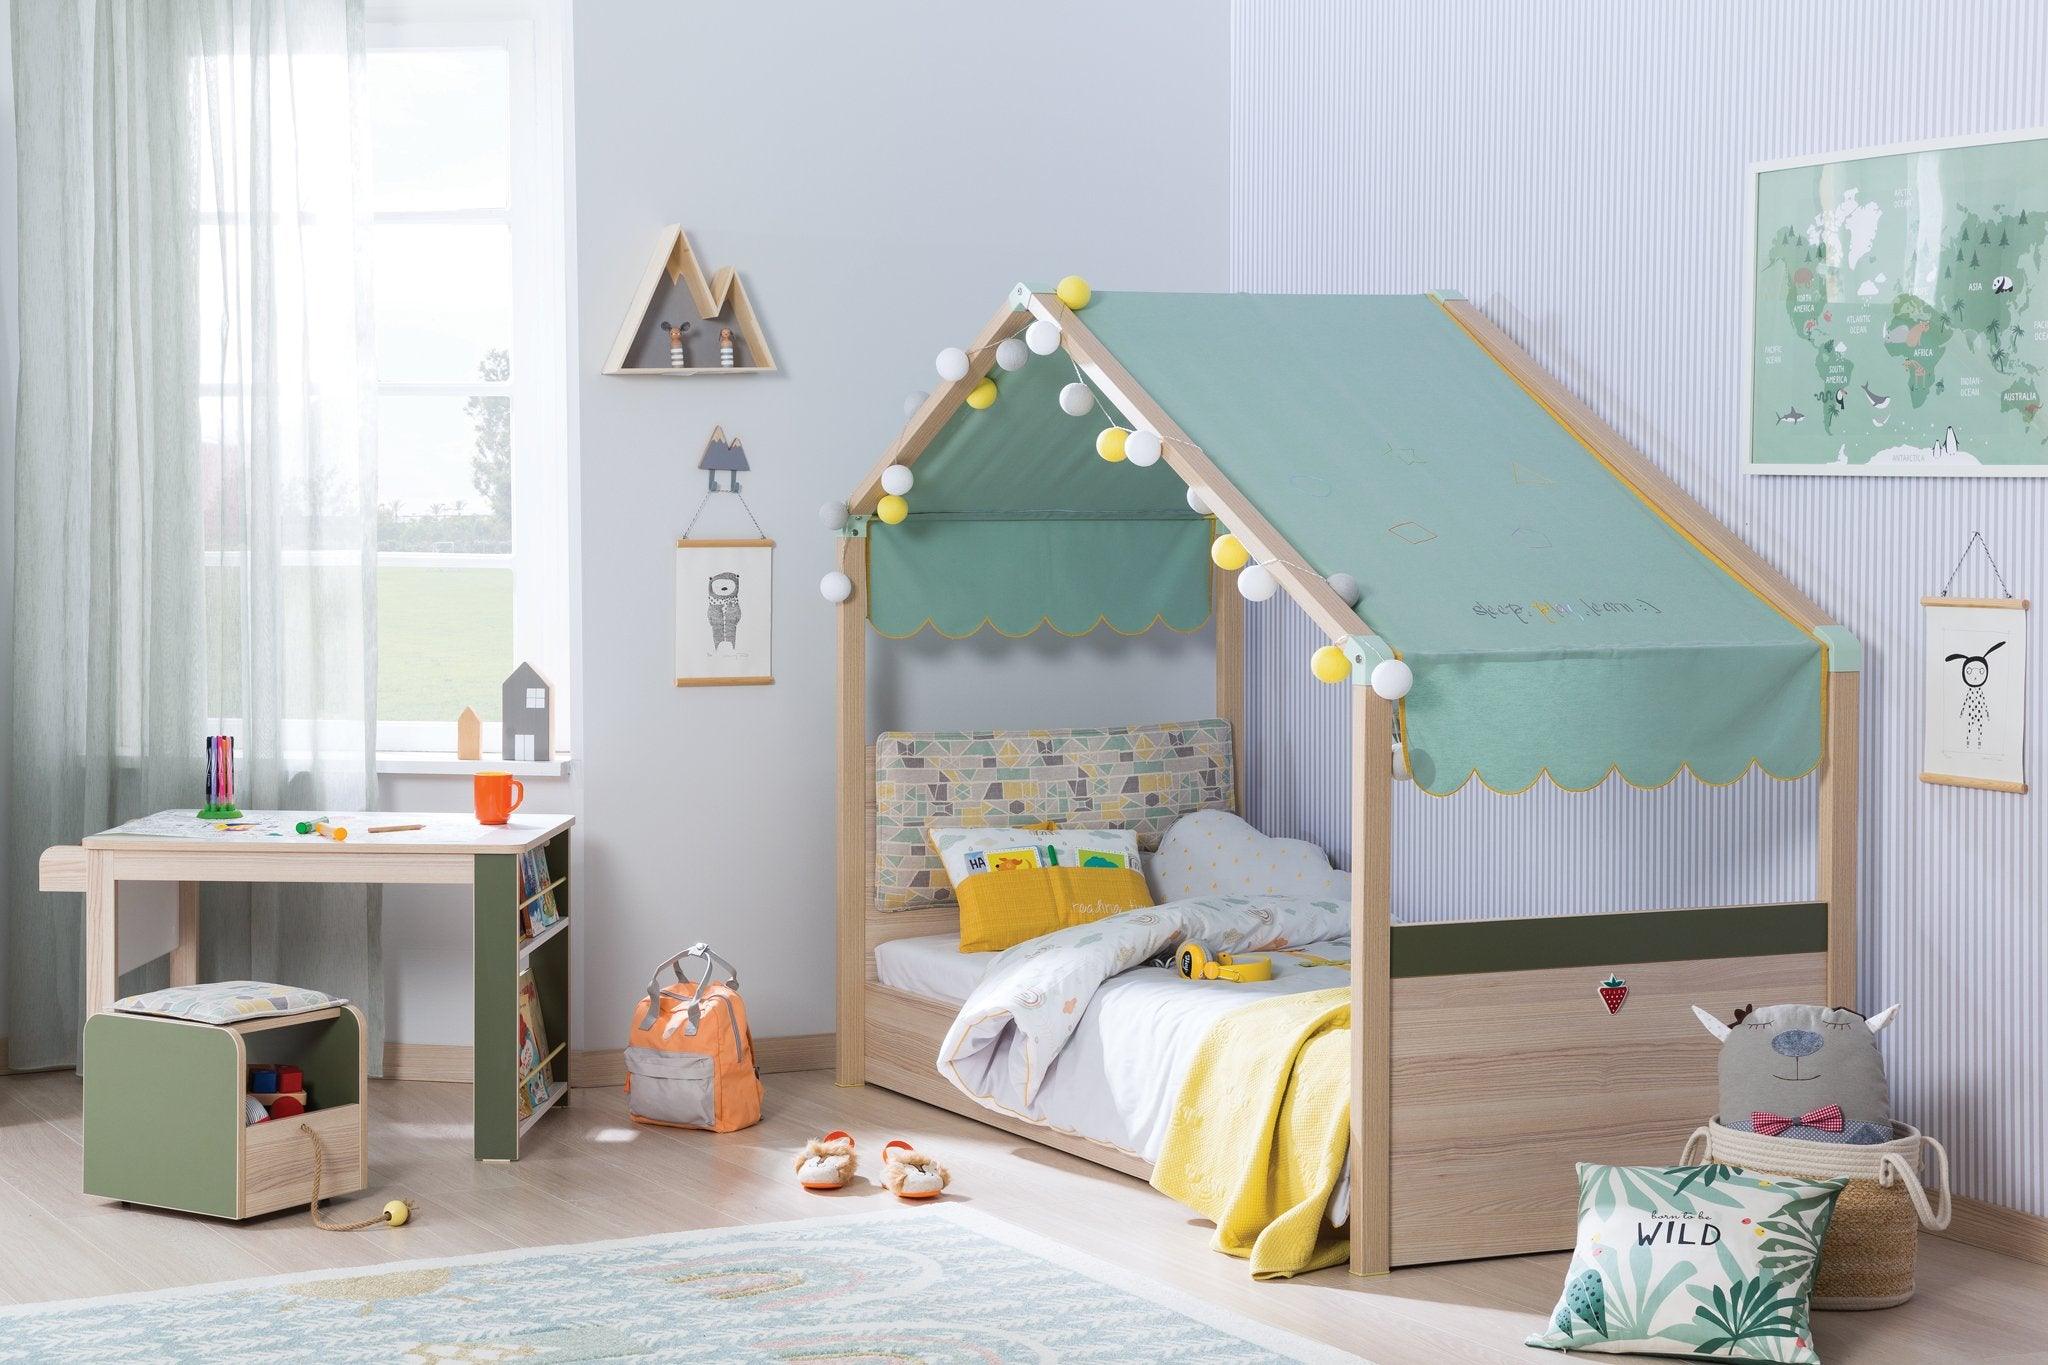 Cilek Montes Bed (80X180 Cm Or 90X200 Cm - With Bundle Options) - Kids Haven